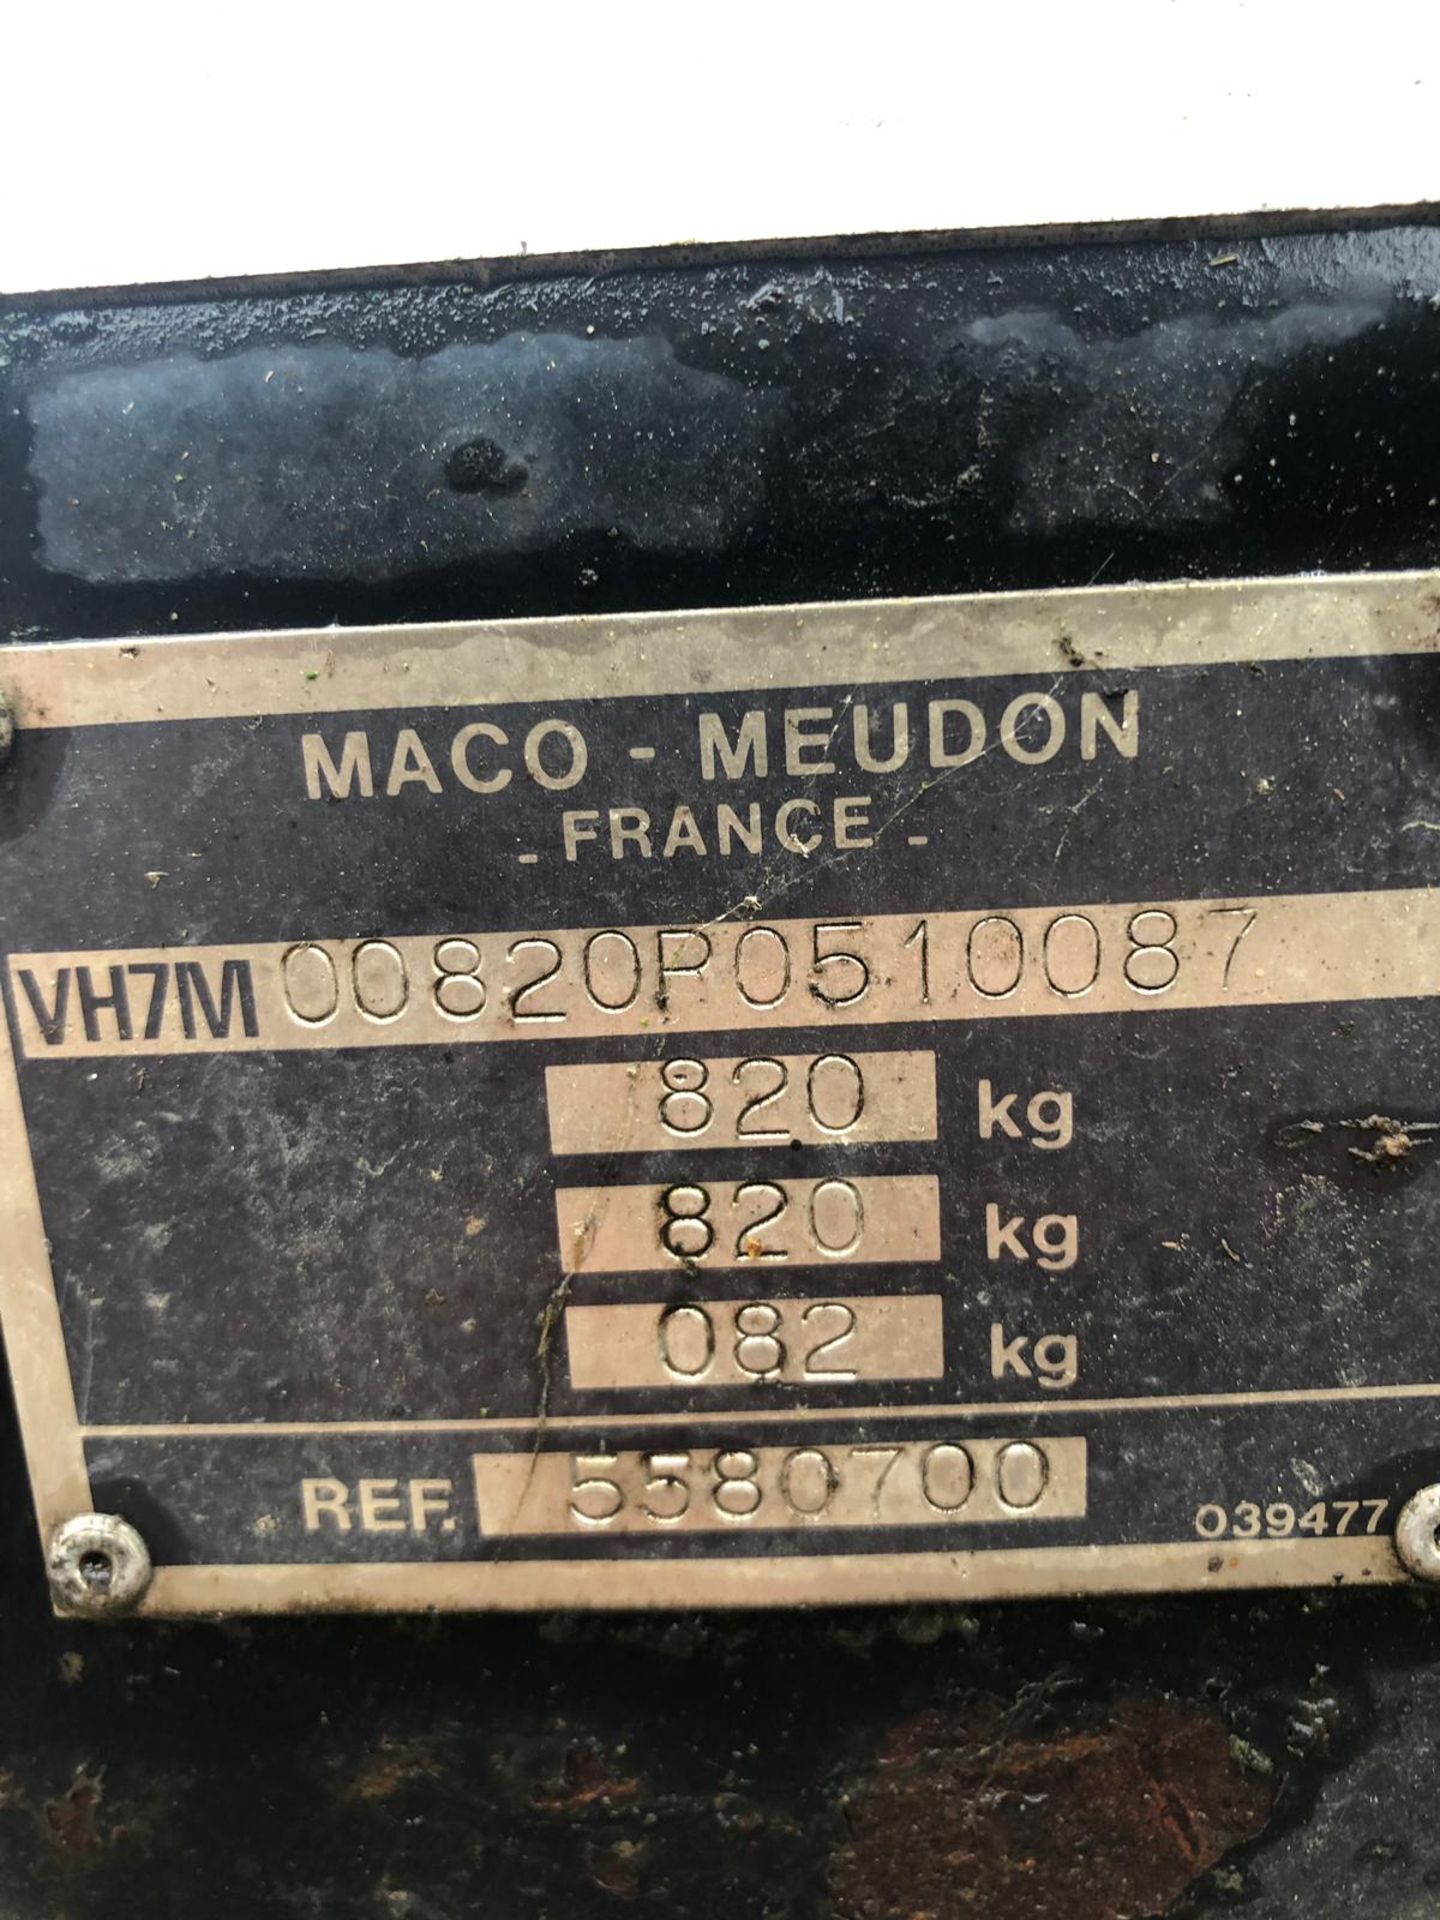 MACO SULLAIR 35 SINGLE AXLE AIR COMPRESSOR, 4 CYLINDER KUBOTA DIESEL ENGINE, RUNS, WORKS, MAKES AIR - Image 6 of 7